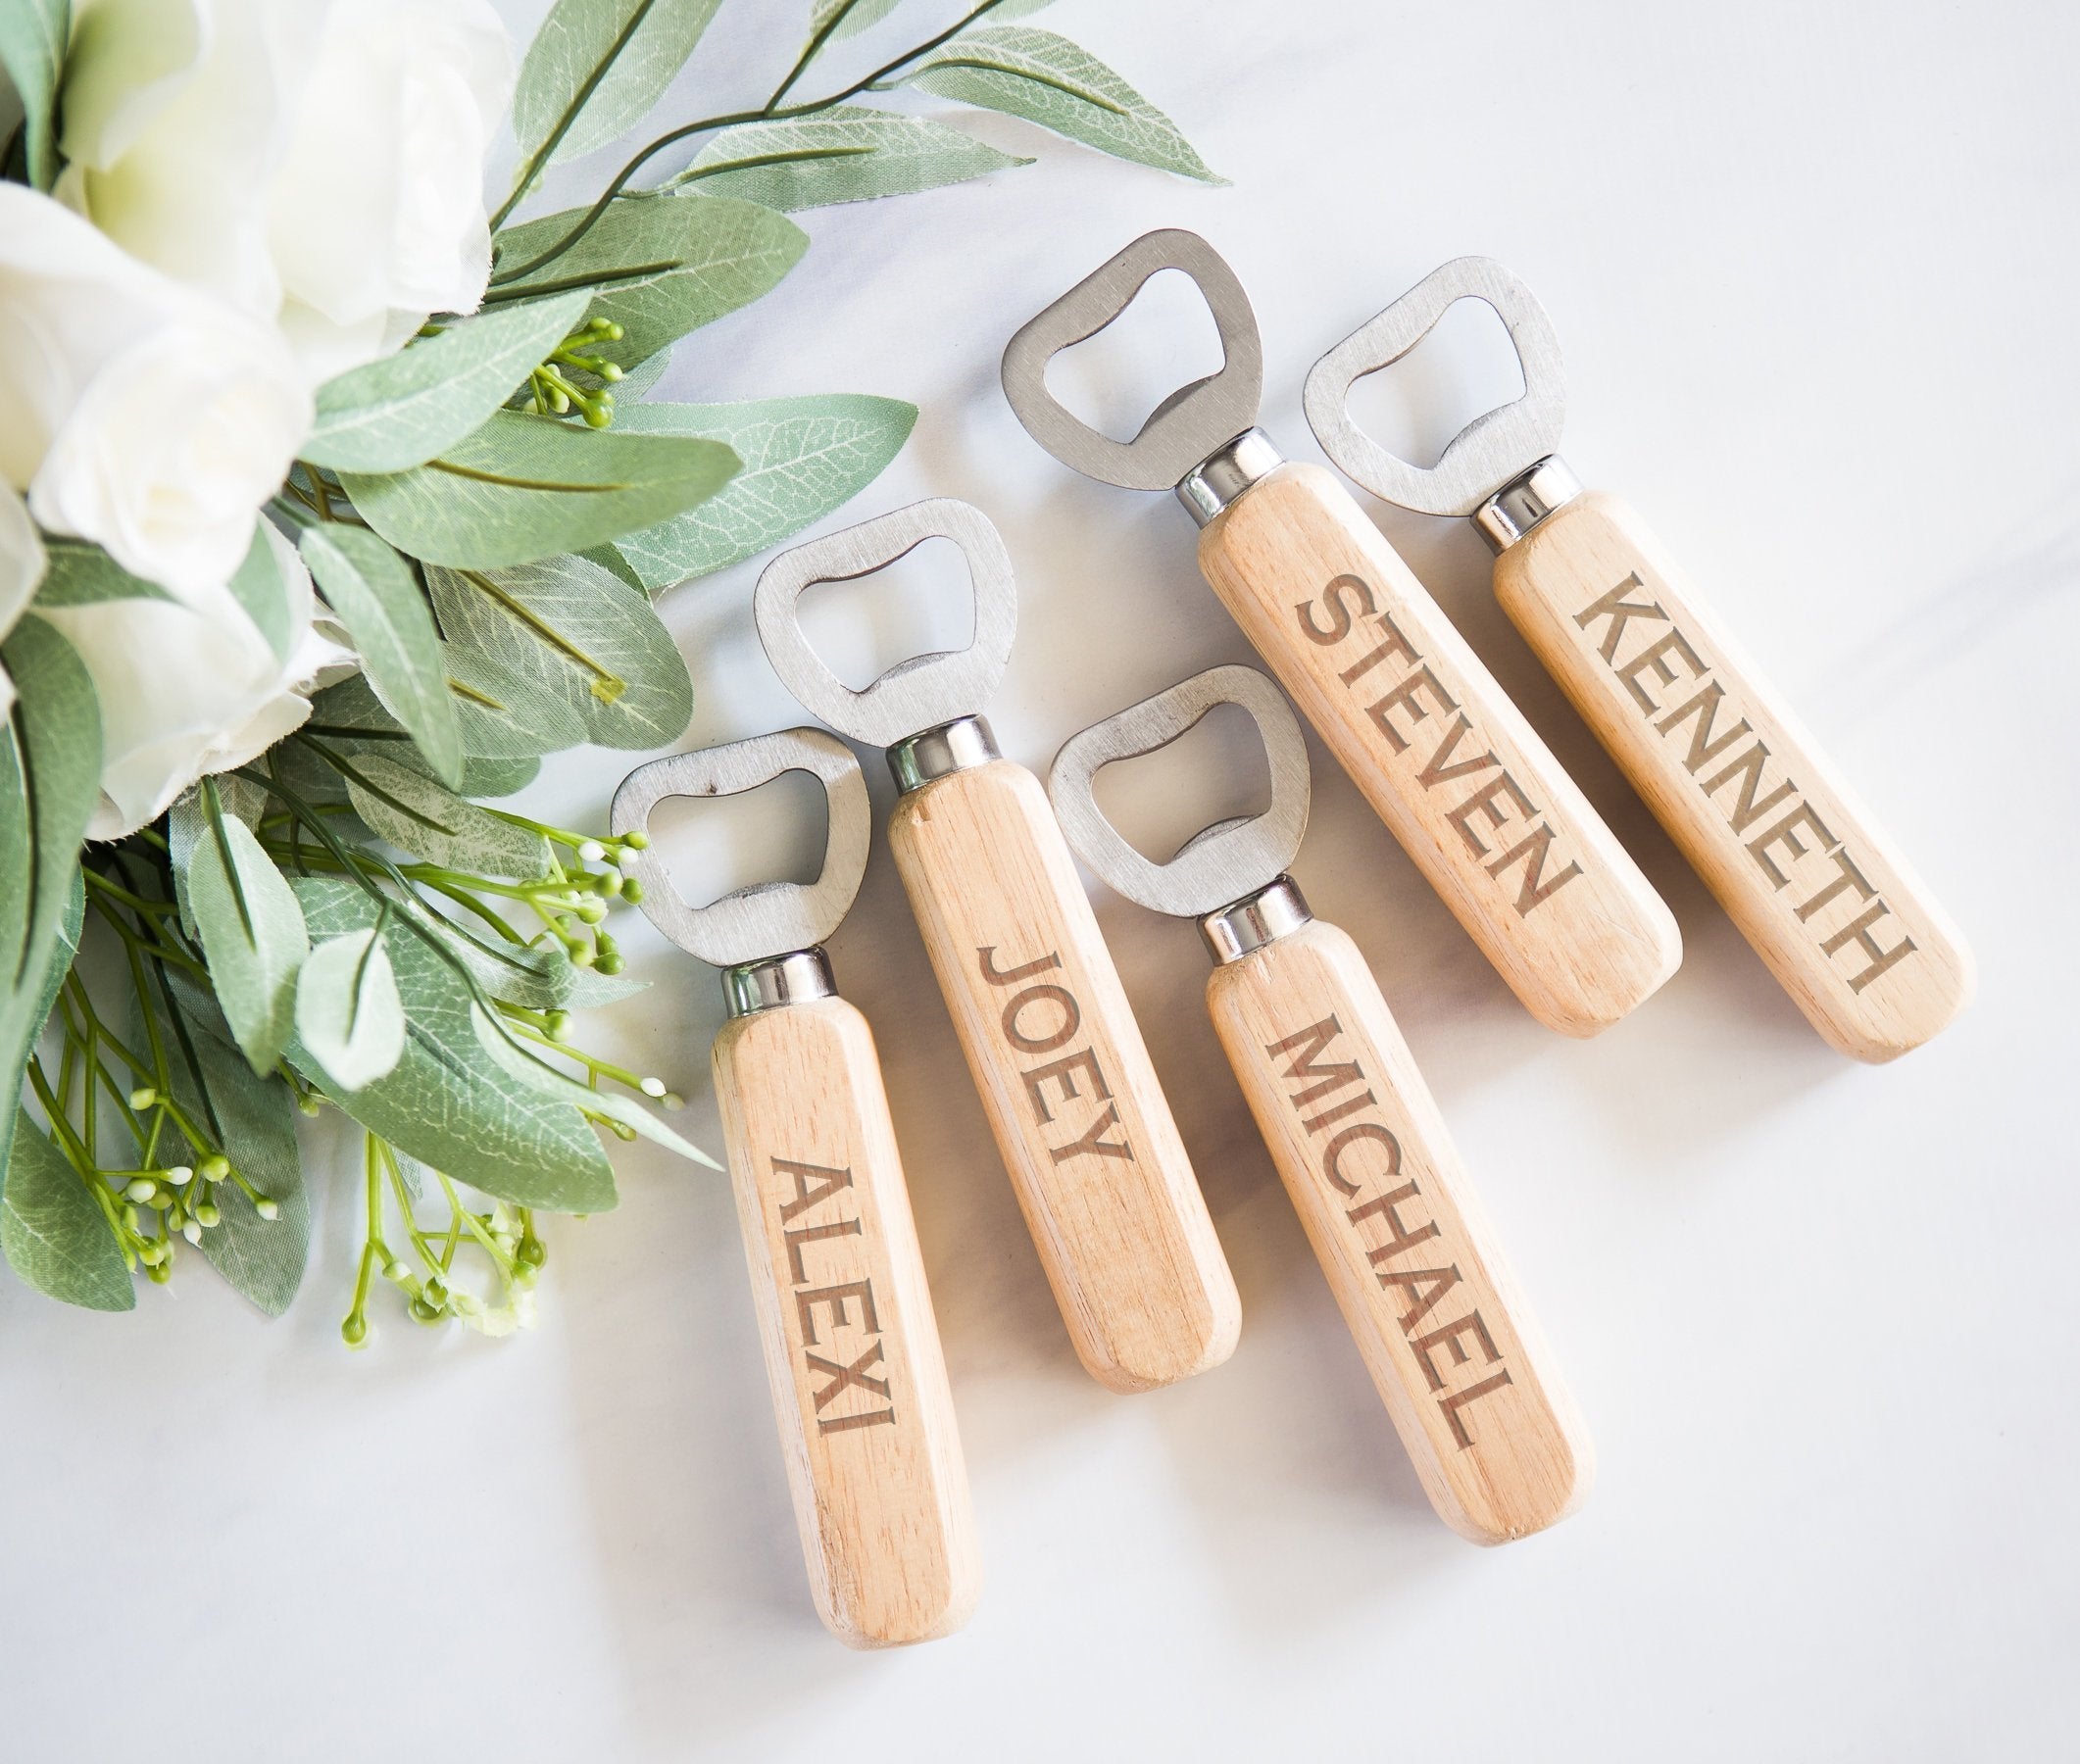 Personalized Wedding Favor Set of 5 Wooden Bottle Openers